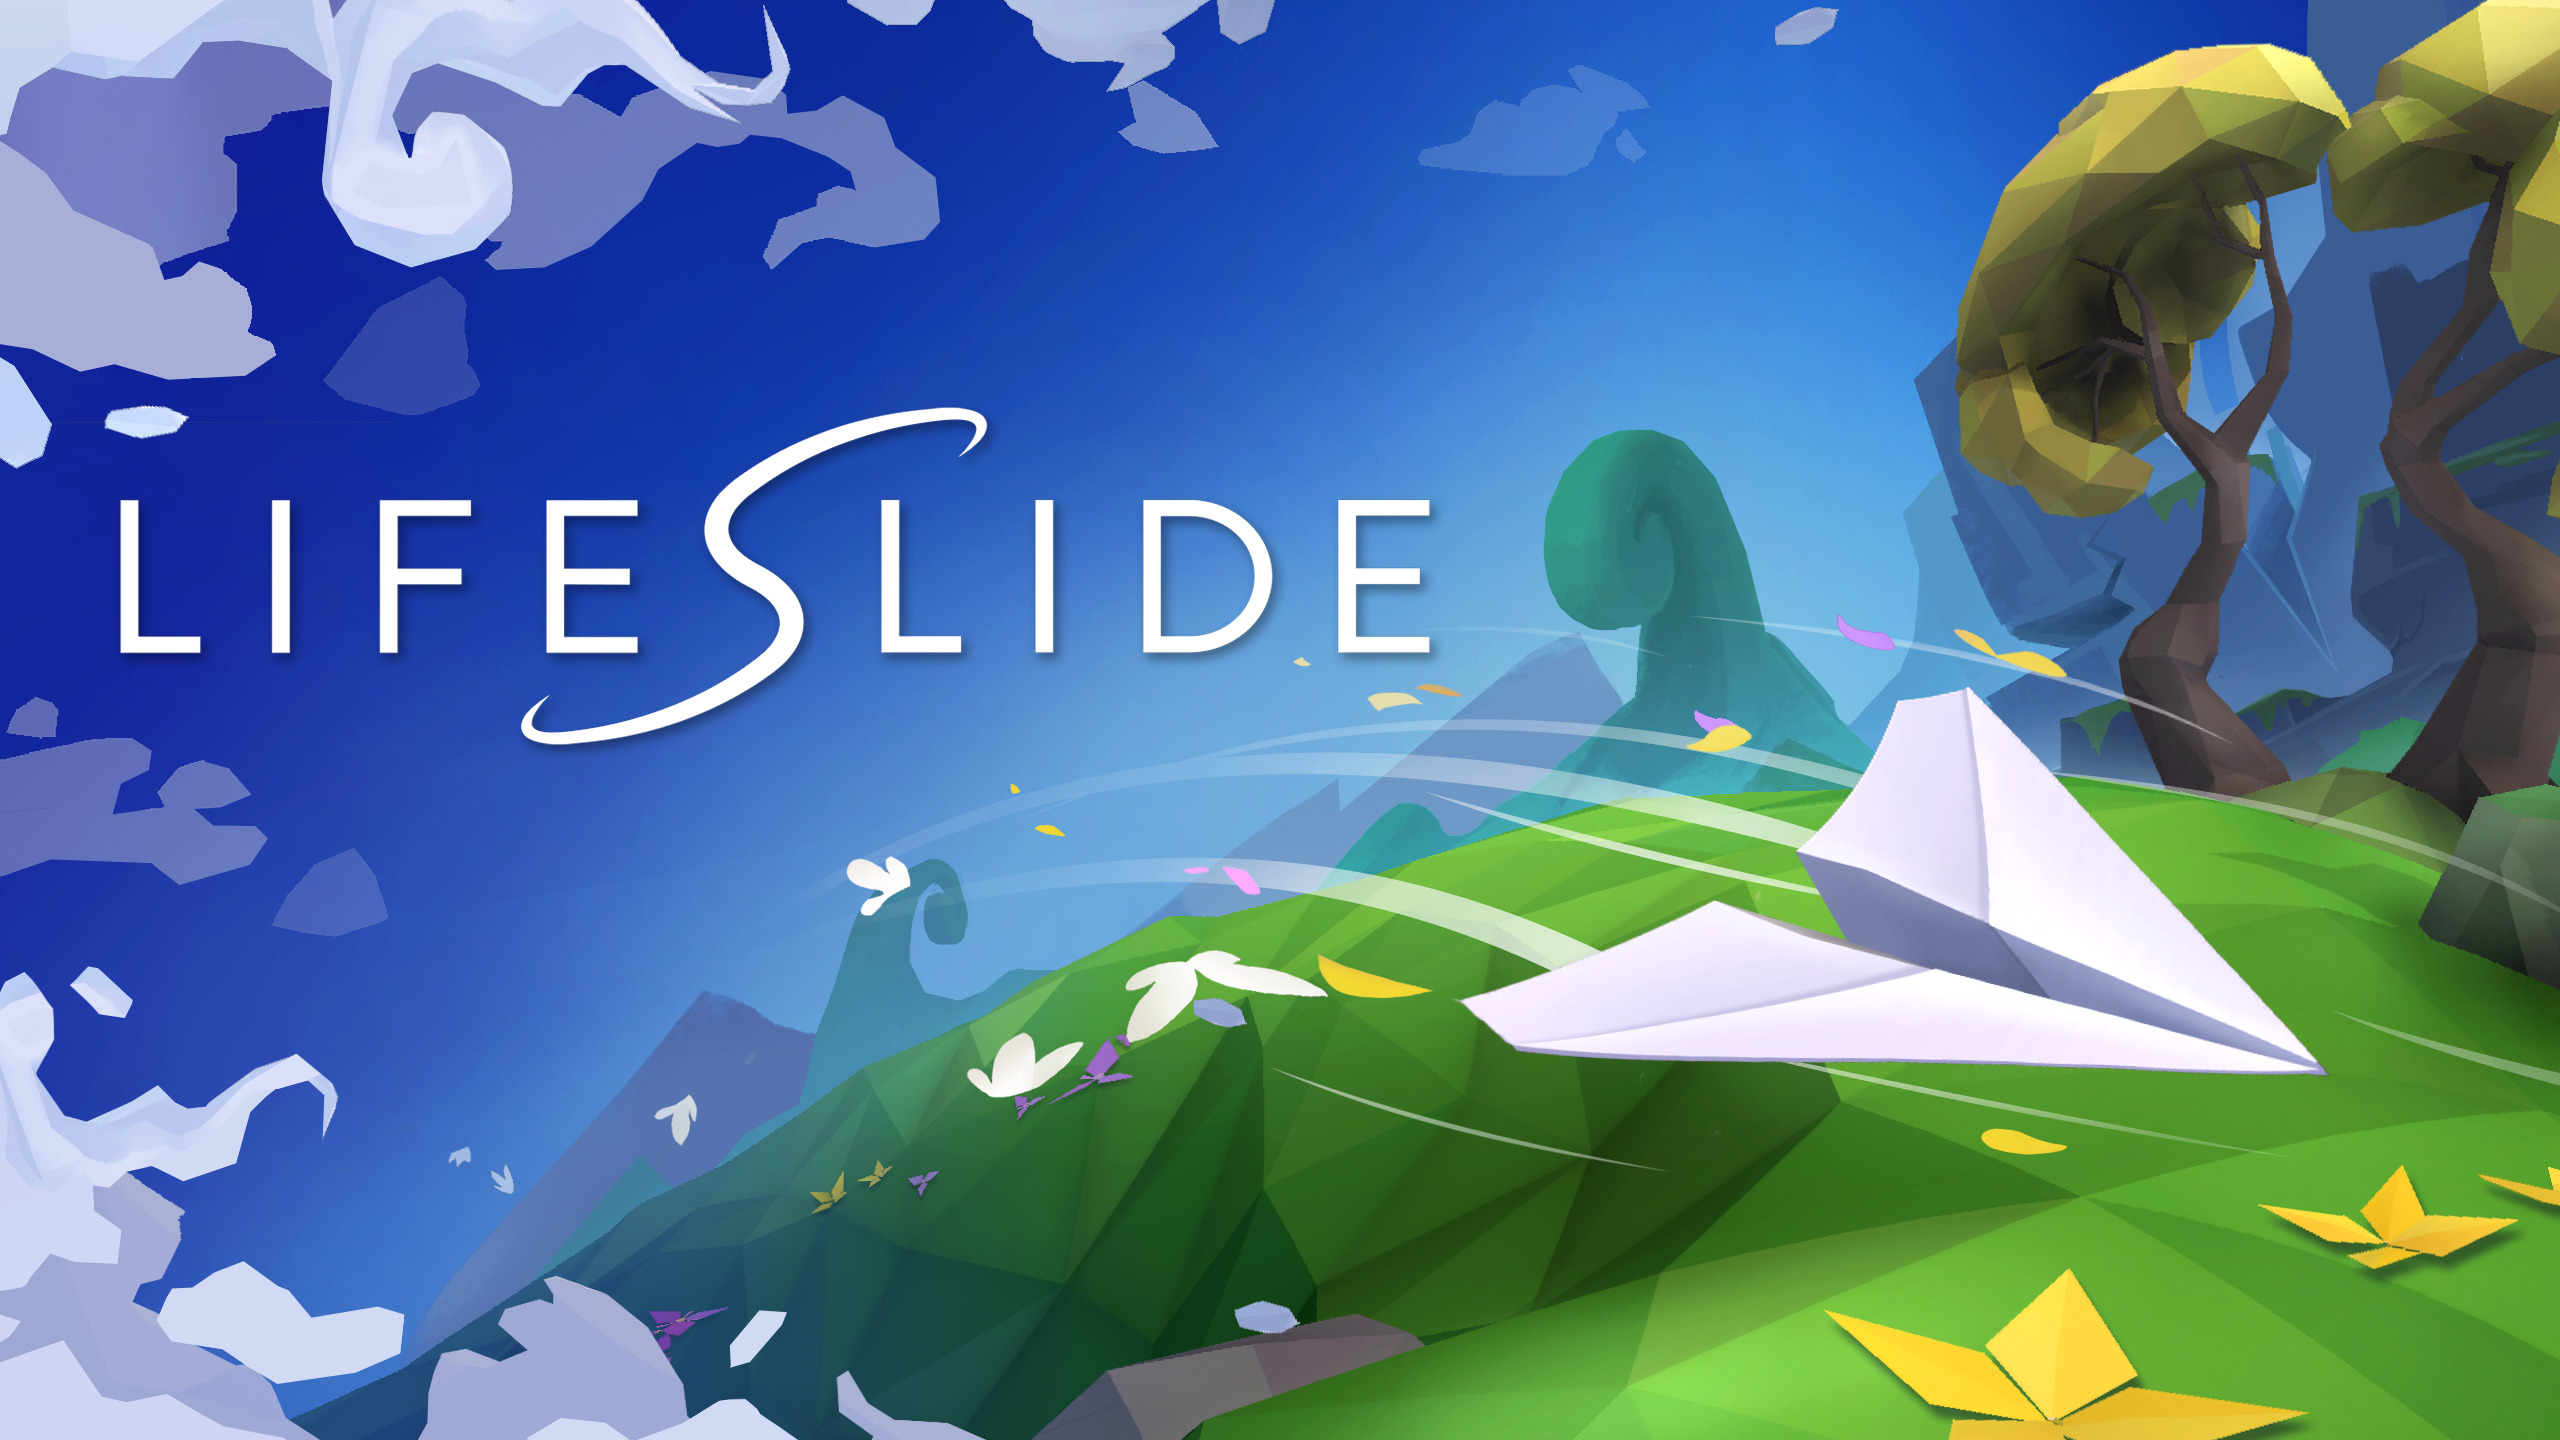 Lifeslide - Challenge Your Skills With ThisPaper Plane Adventure